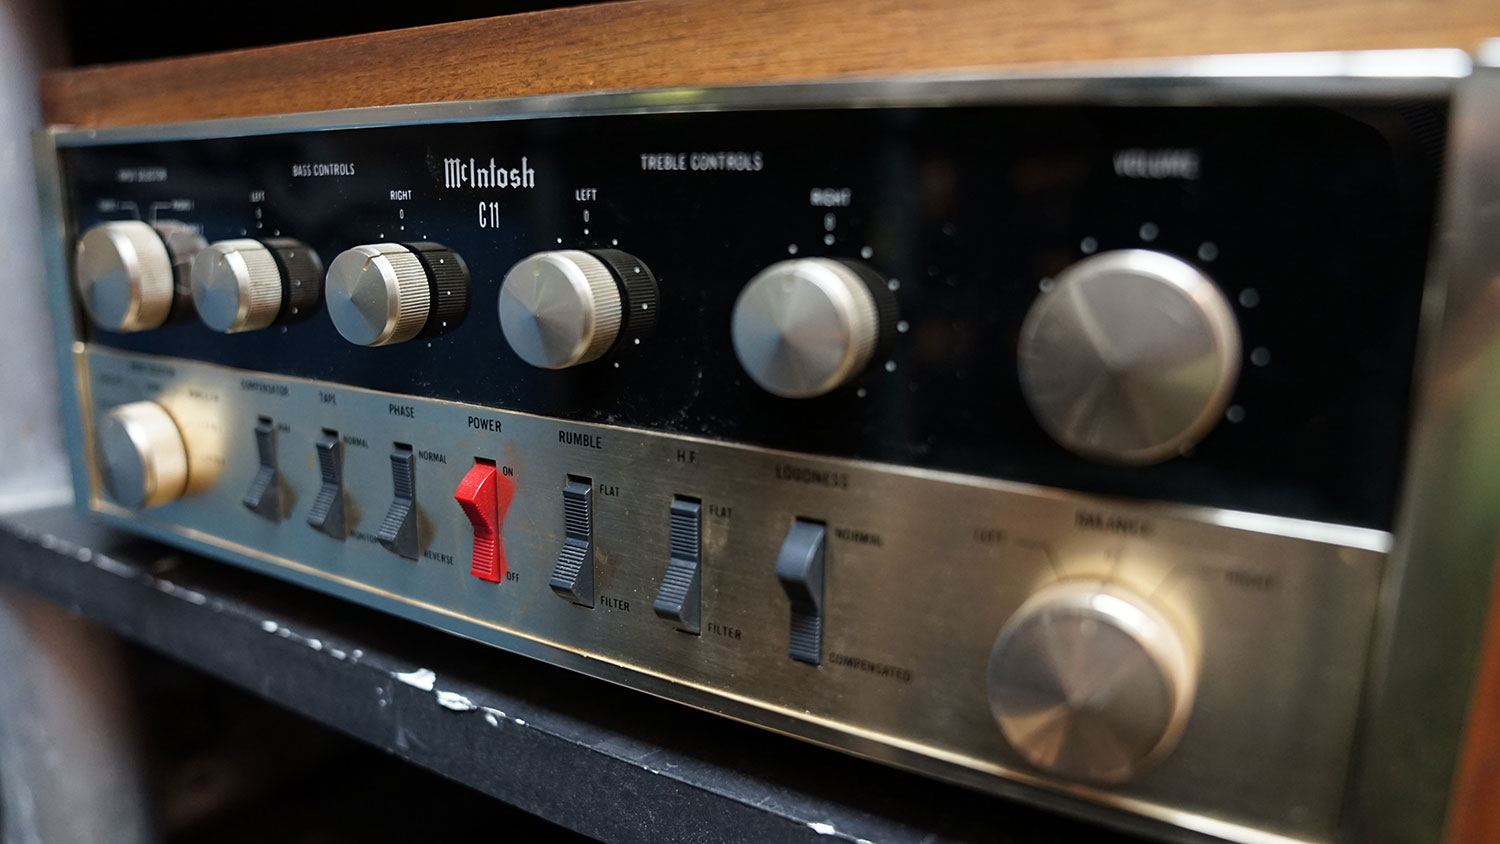 McIntosh C 11 – High End Stereo Equipment We Buy